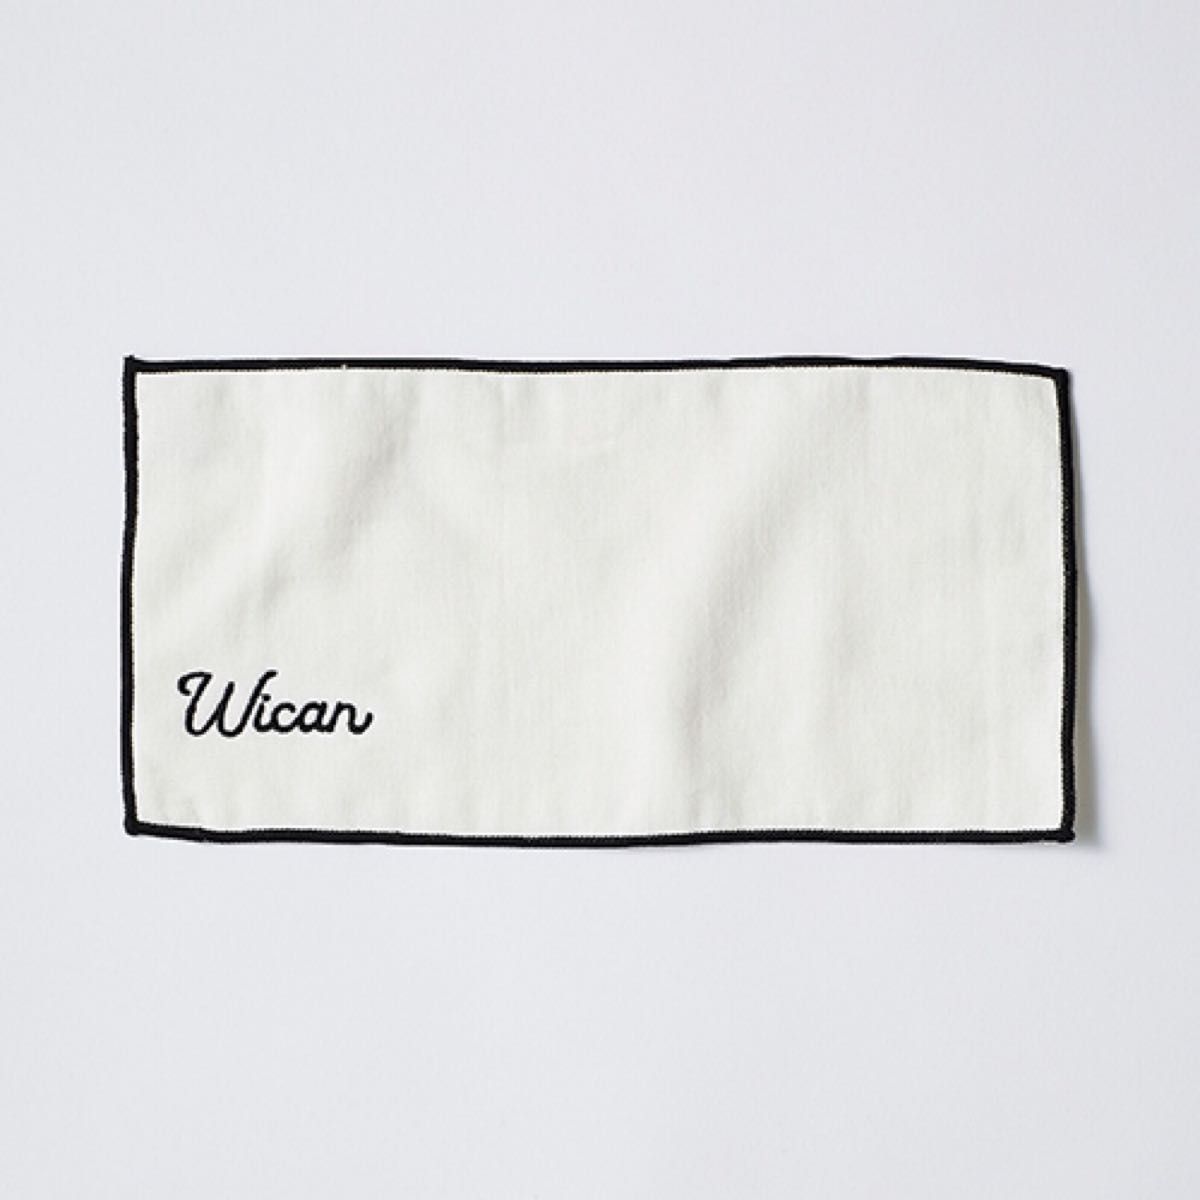 Wican hand towel 2020 - Autumn ハンドタオル